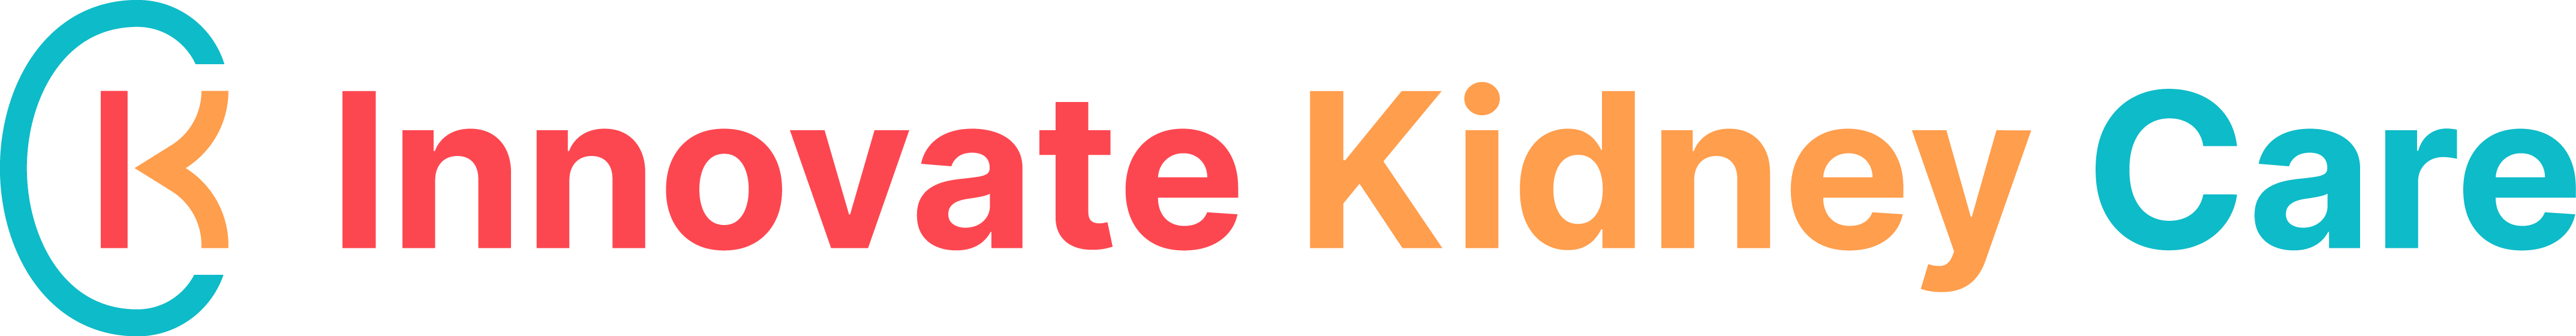 Innovate Kidney Care logo